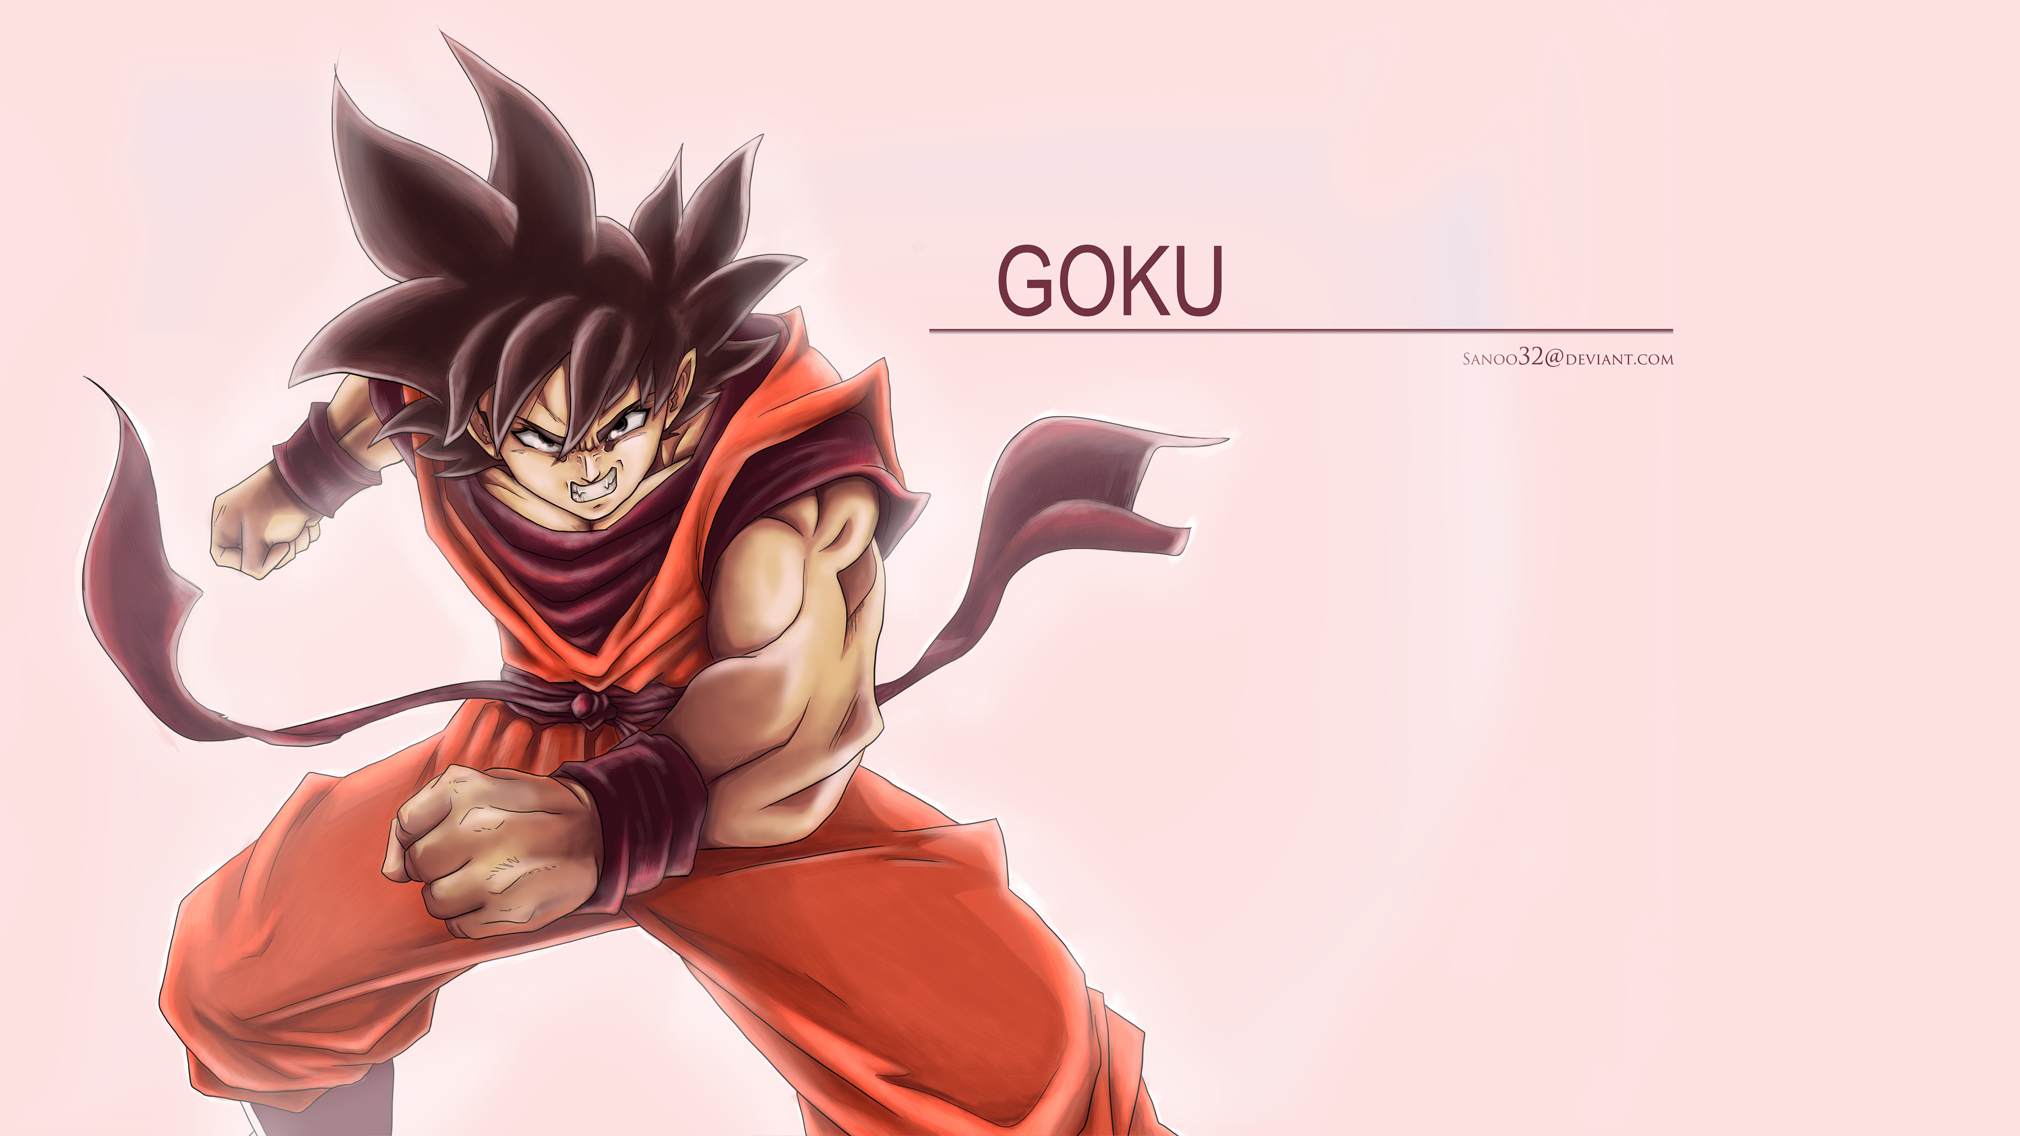 Goku Wallpaper by Sanoo32 on DeviantArt